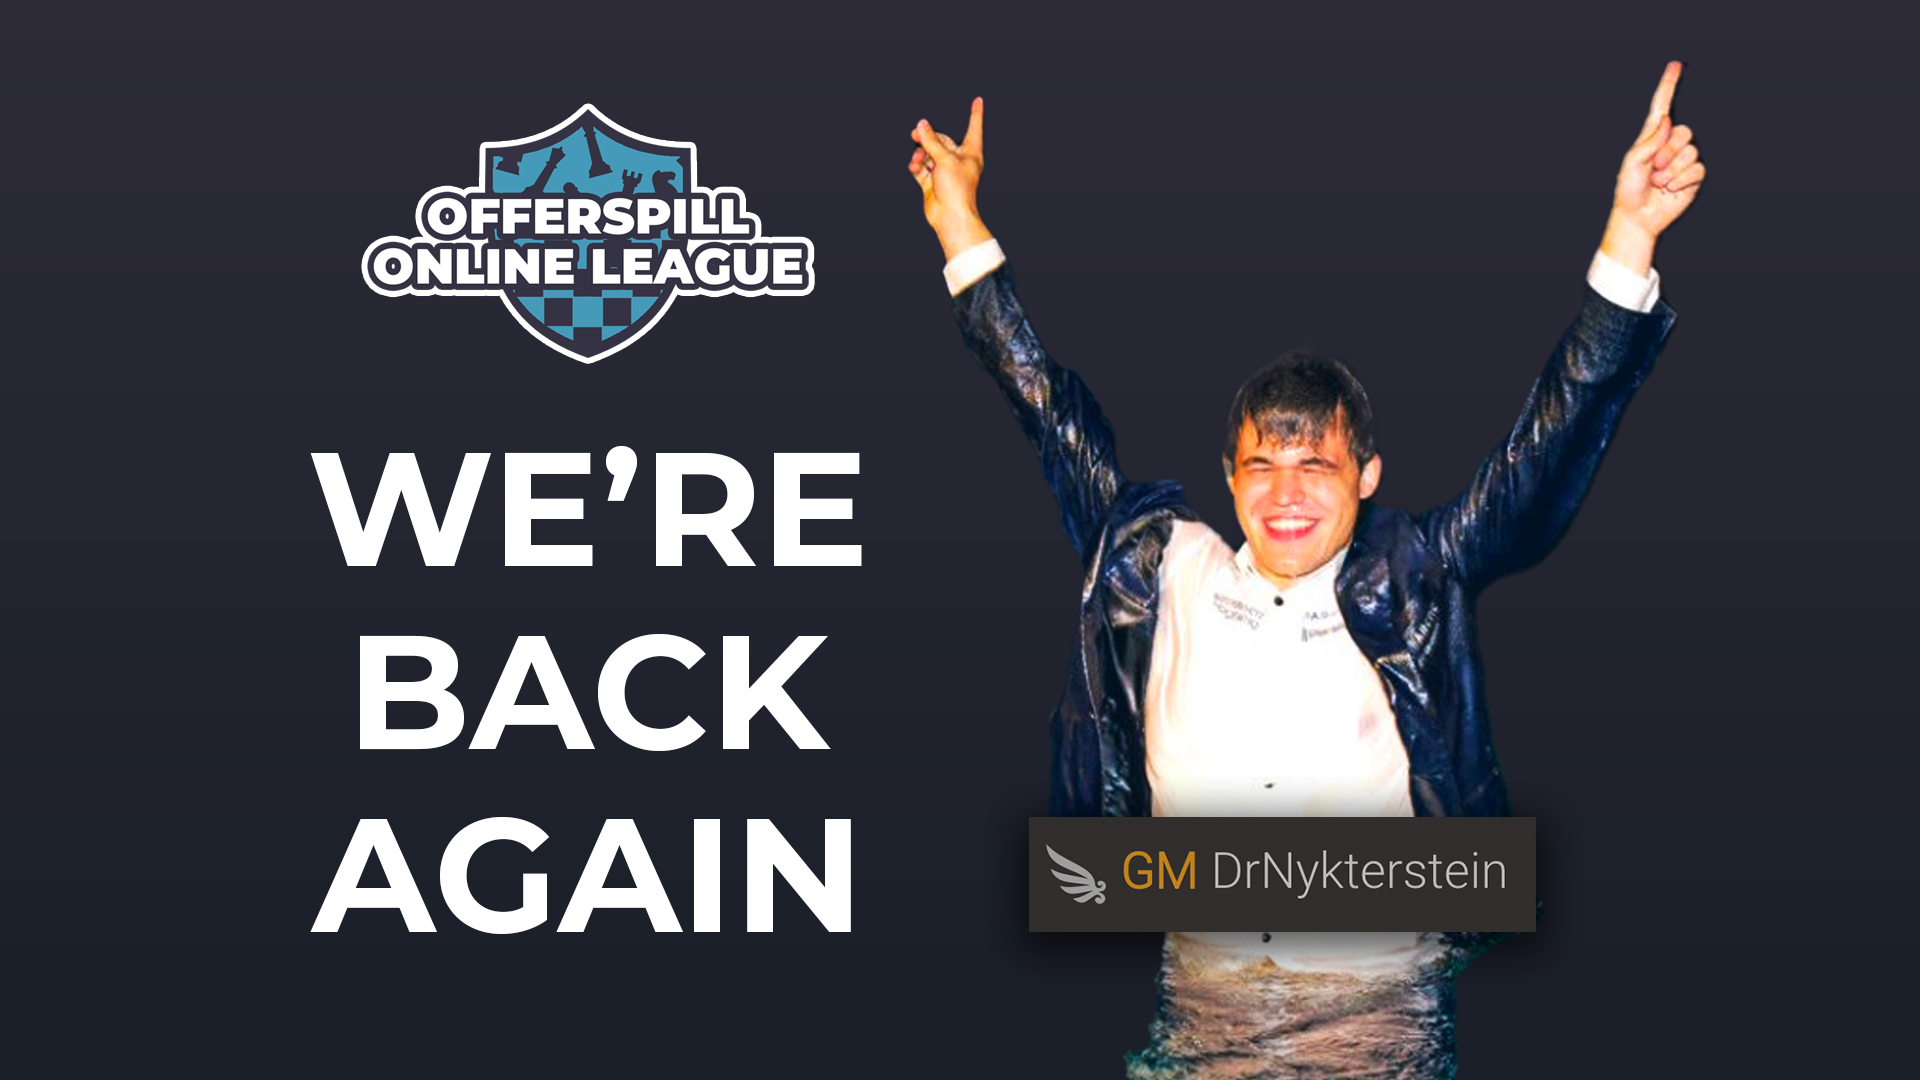 Offerspill Online League is back